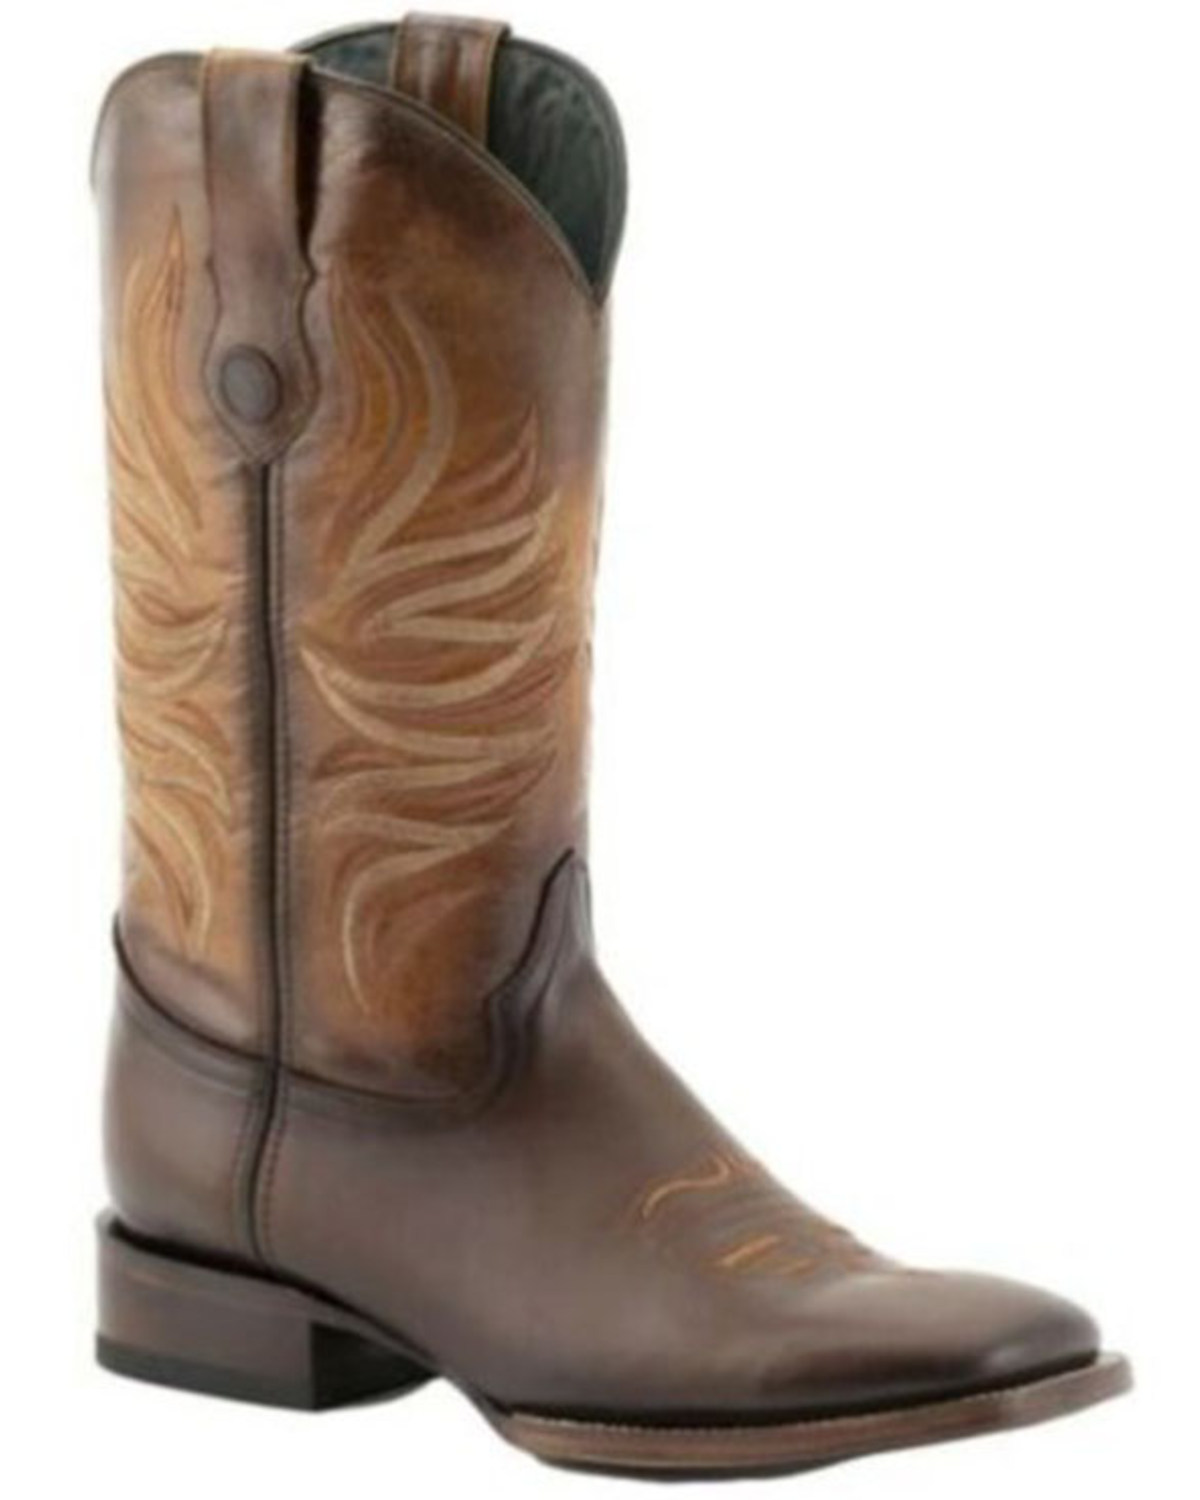 Ferrini Men's Fuego Western Boots - Broad Square Toe